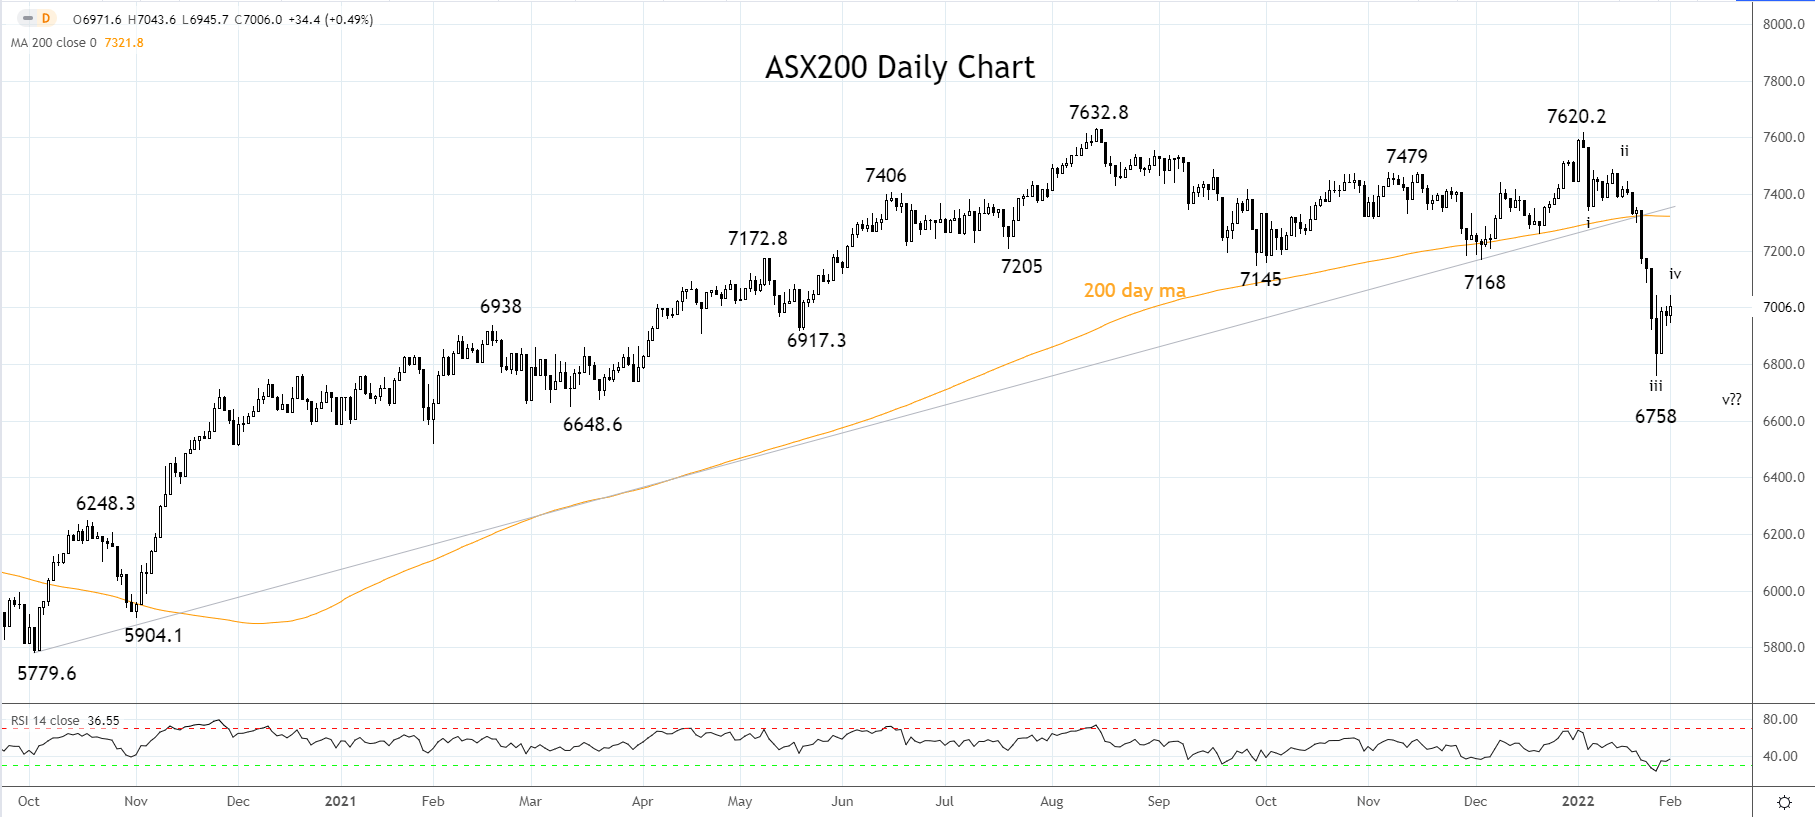 ASX200 Daily chart 1st Feb